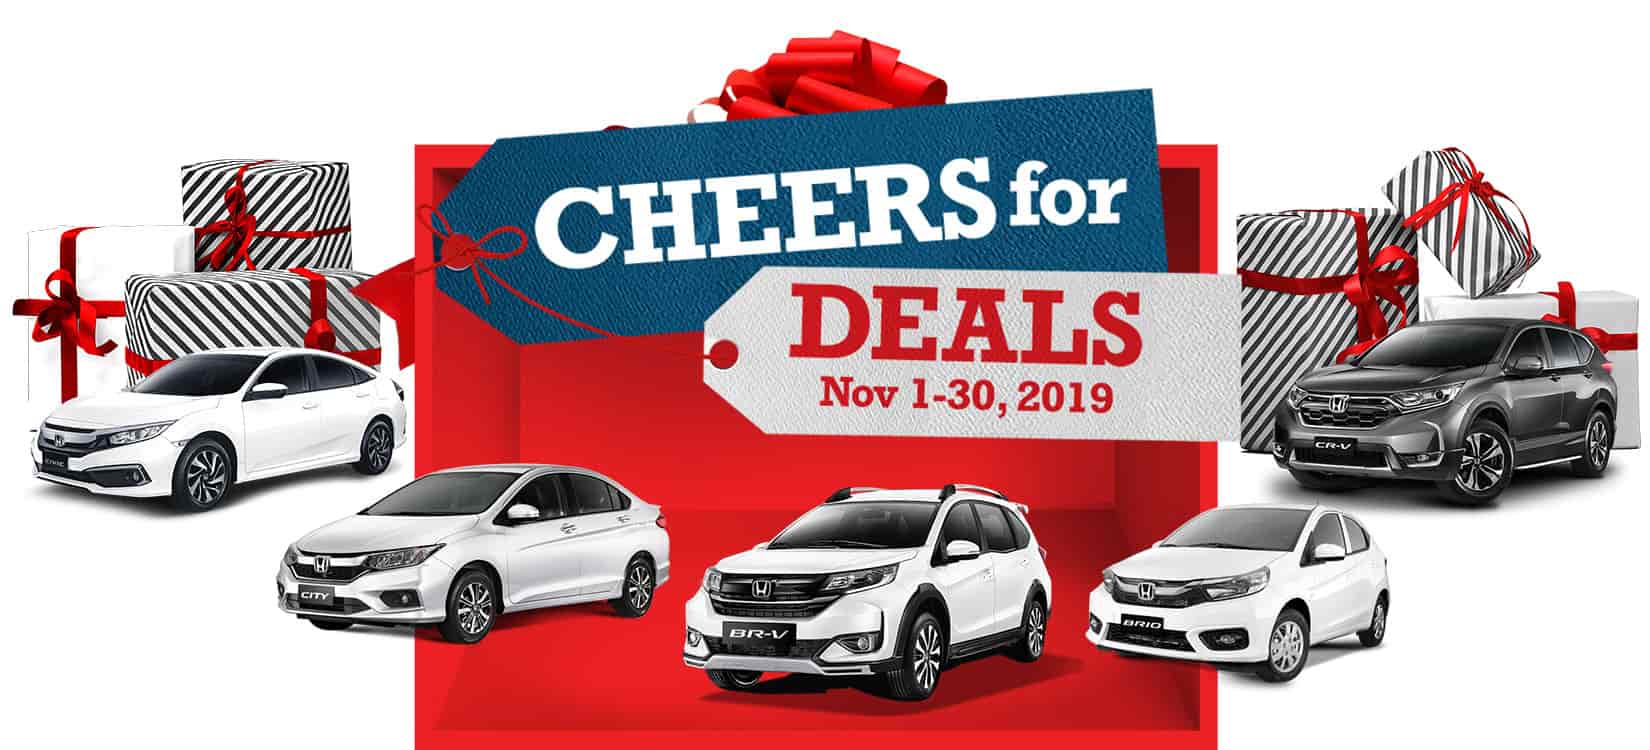 Honda Offers Holiday Promos this November